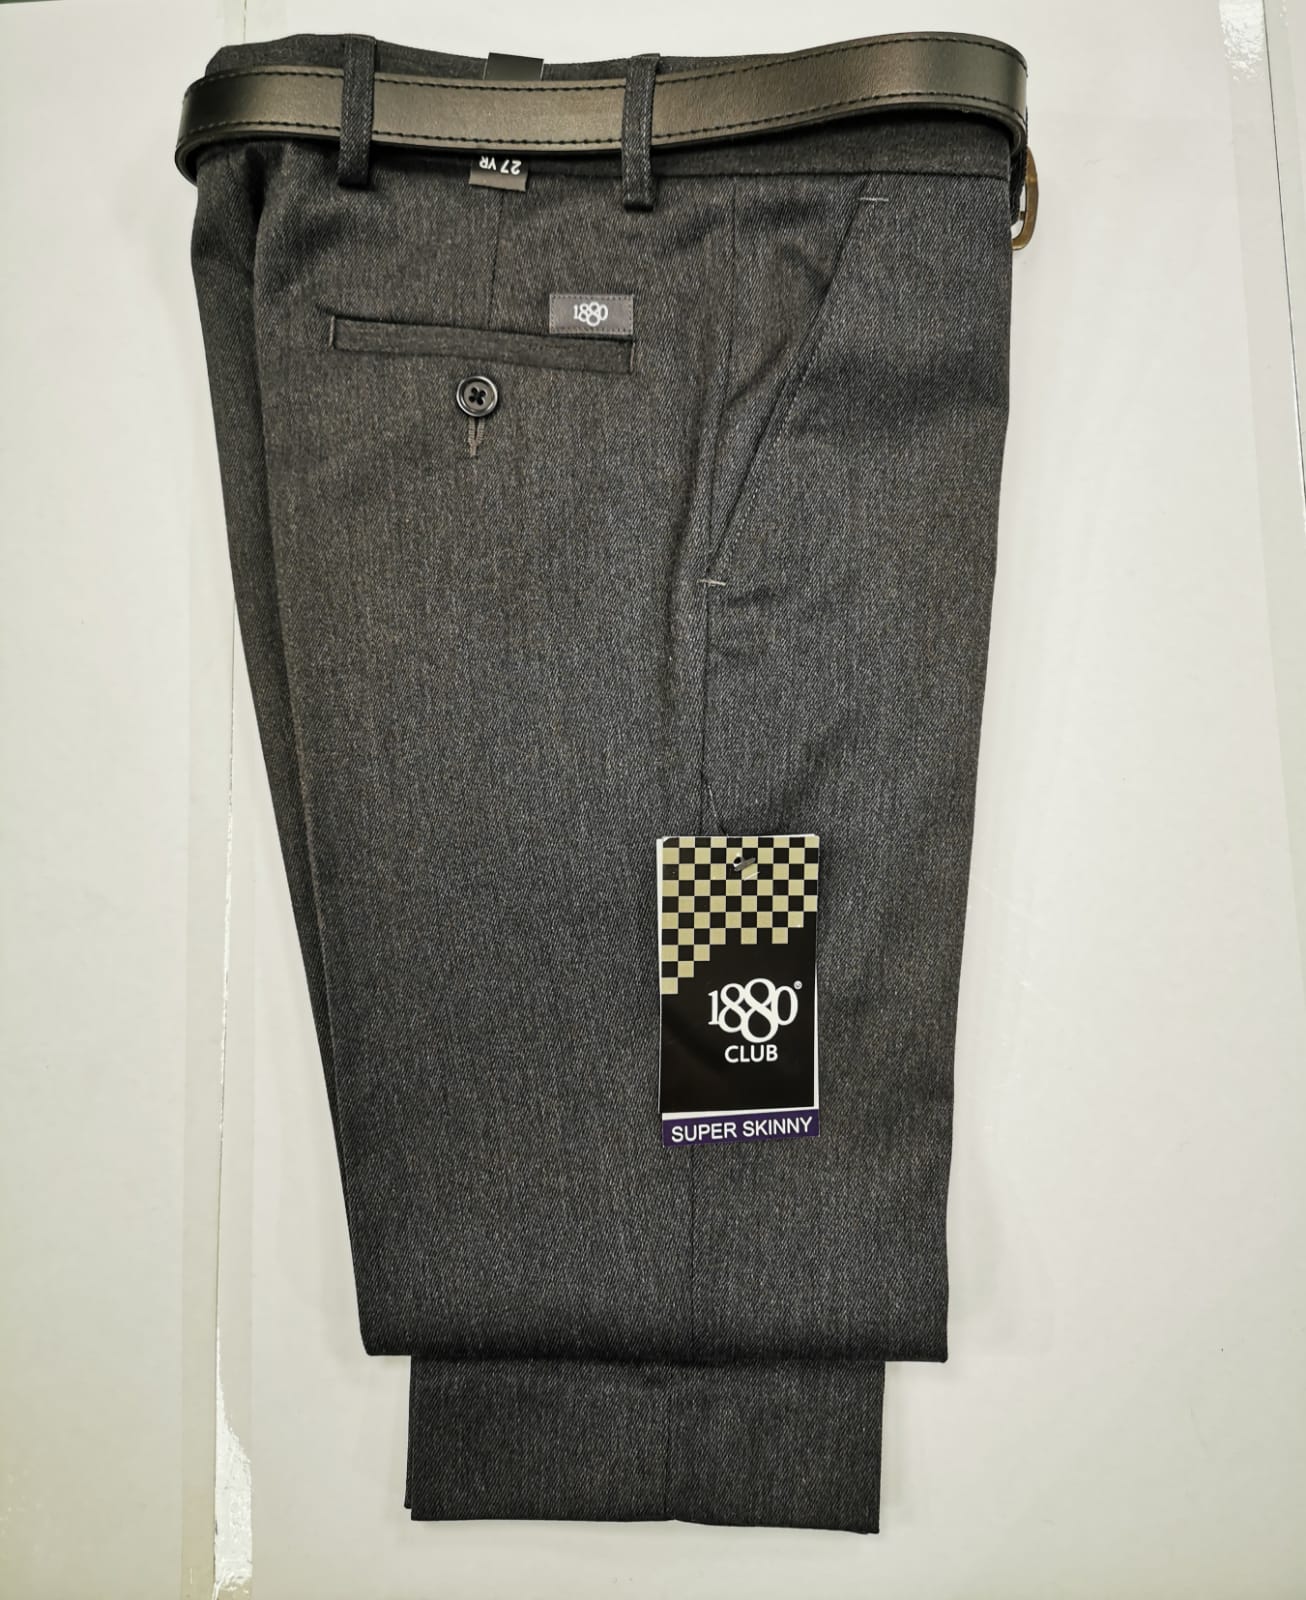 1880 Club Grey School Trousers Super Skinny - Mike O'Connells